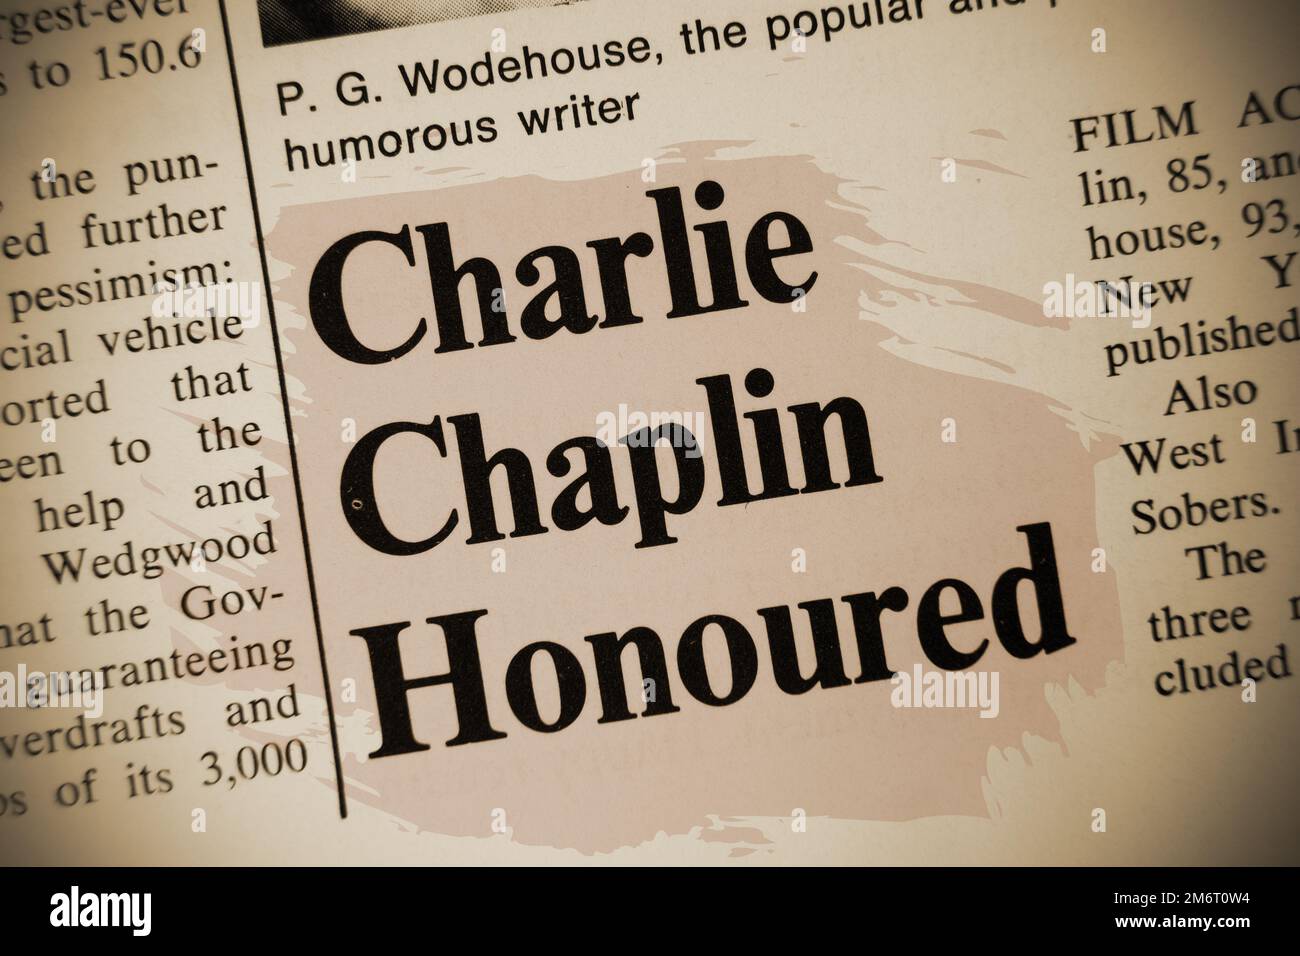 news story from 1975 newspaper headline article title - Charlie Chaplin Honoured - sepia overlay Stock Photo